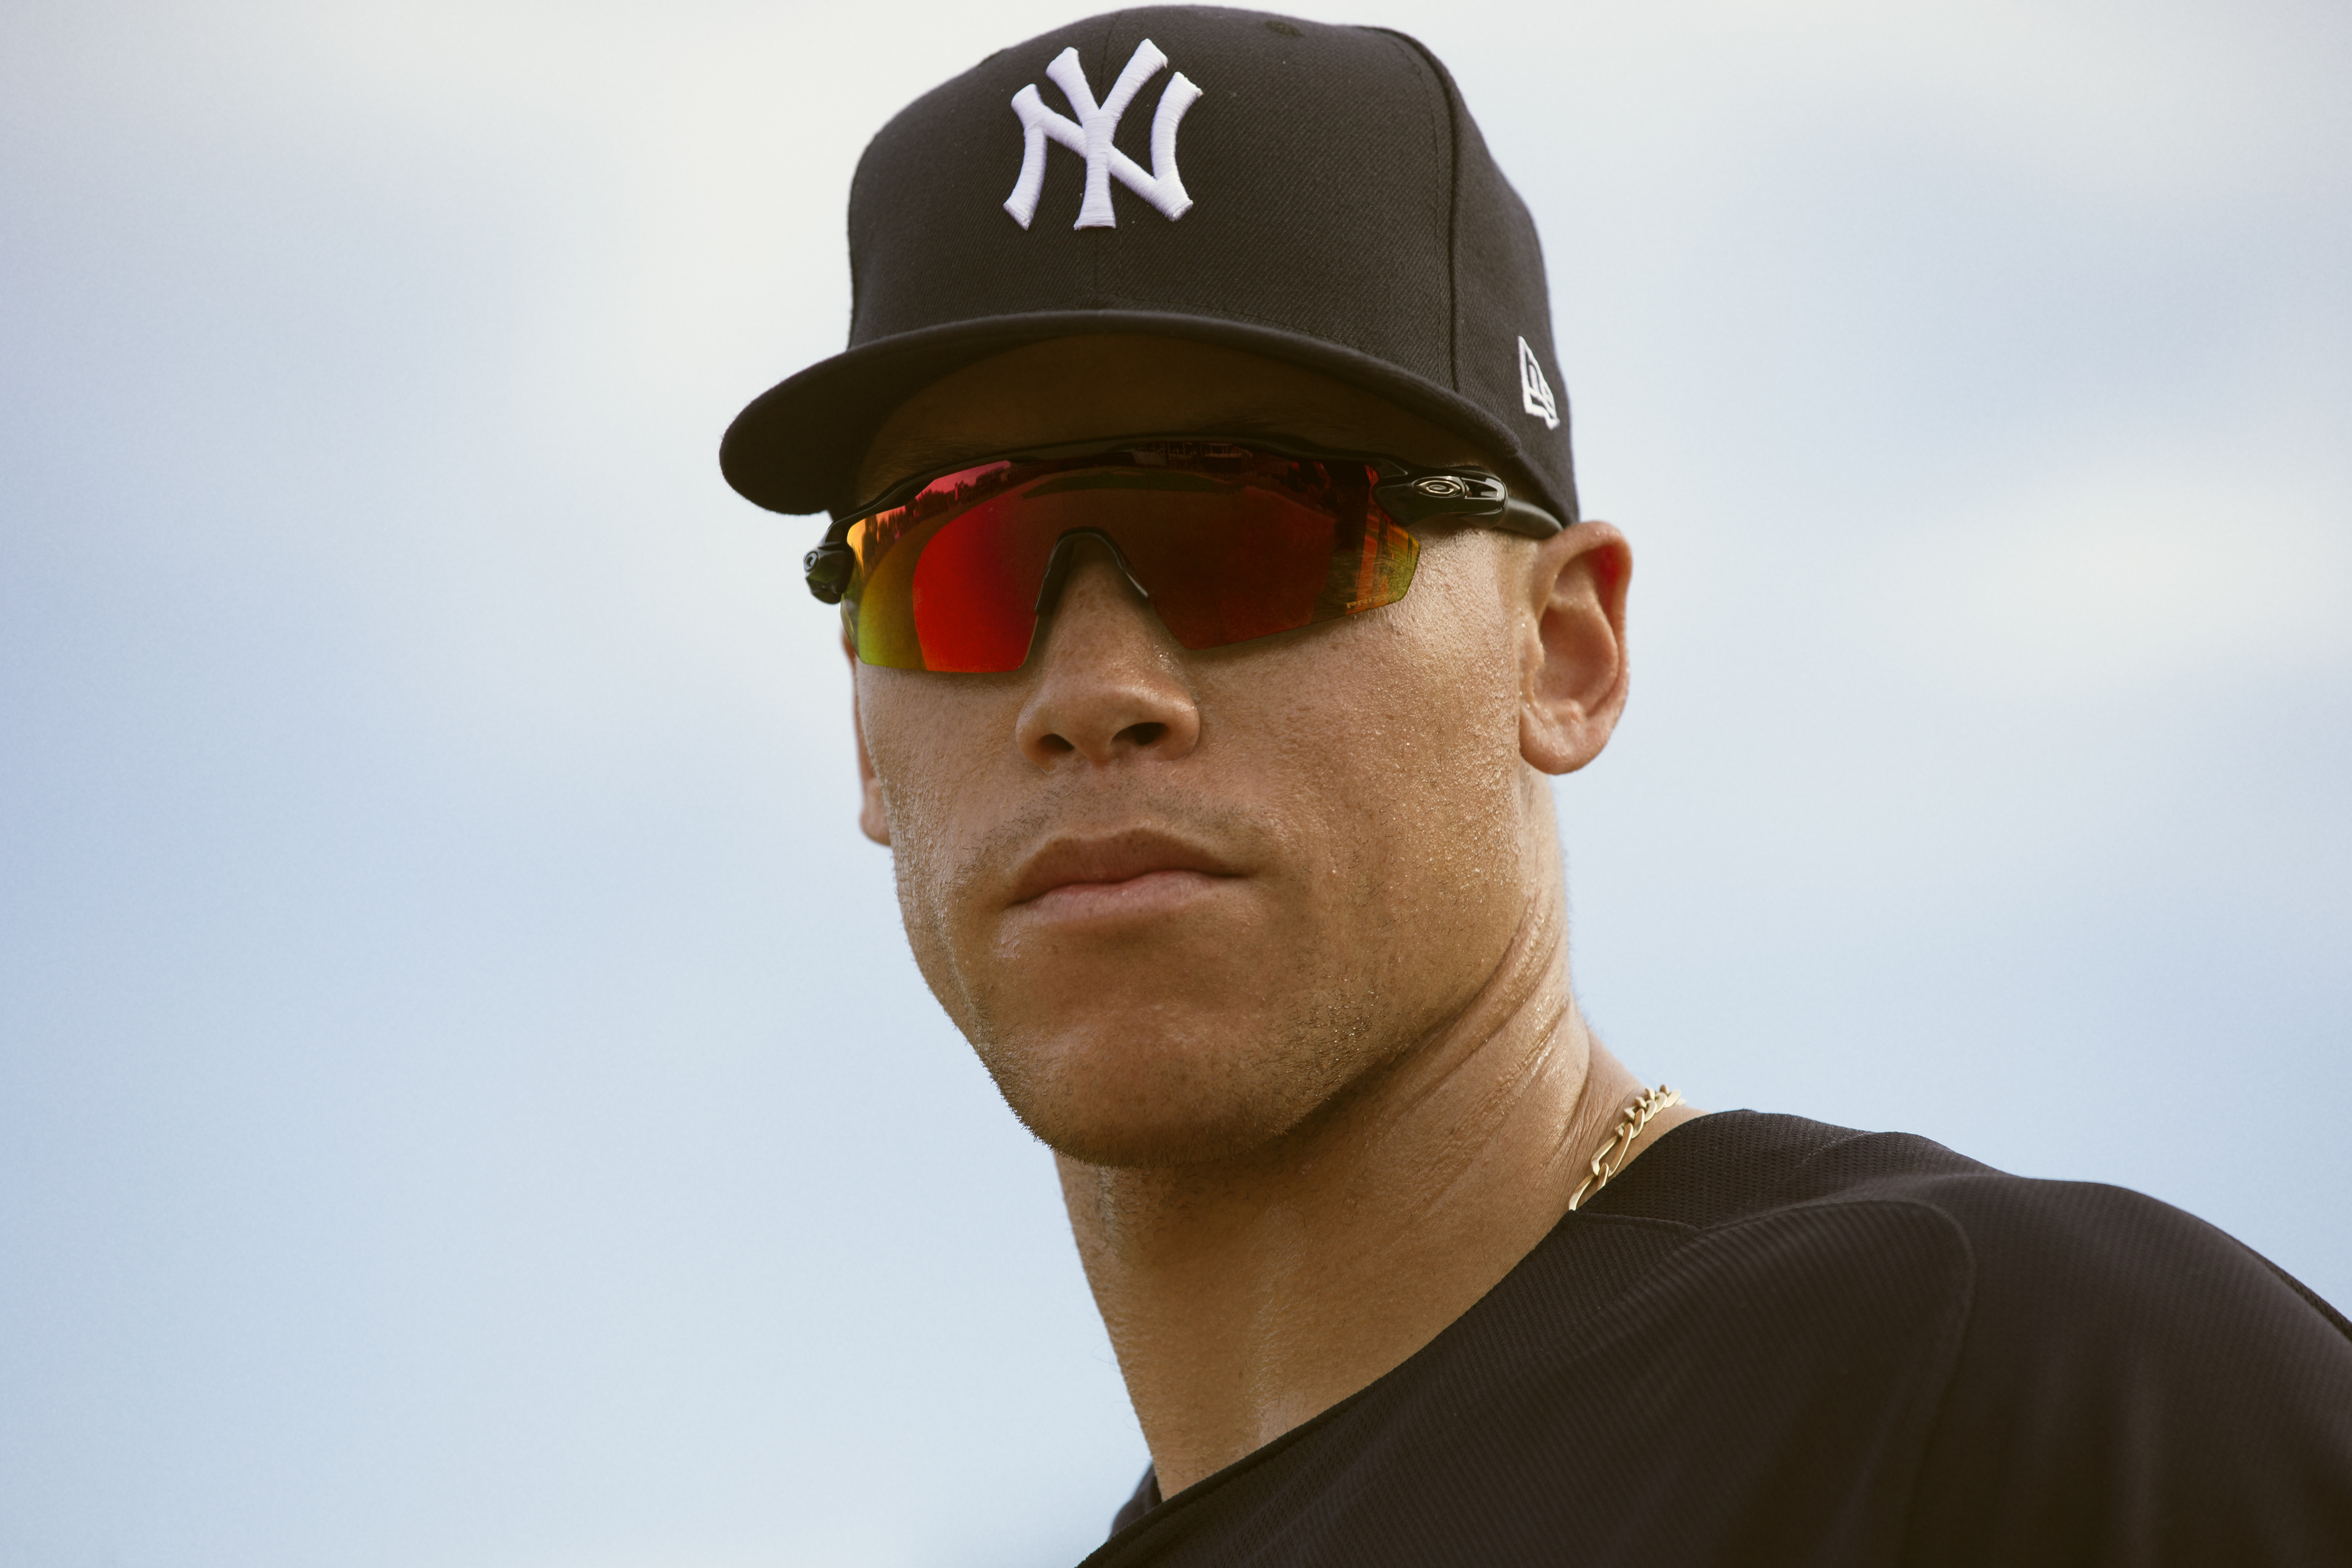 oakley sunglasses for baseball players